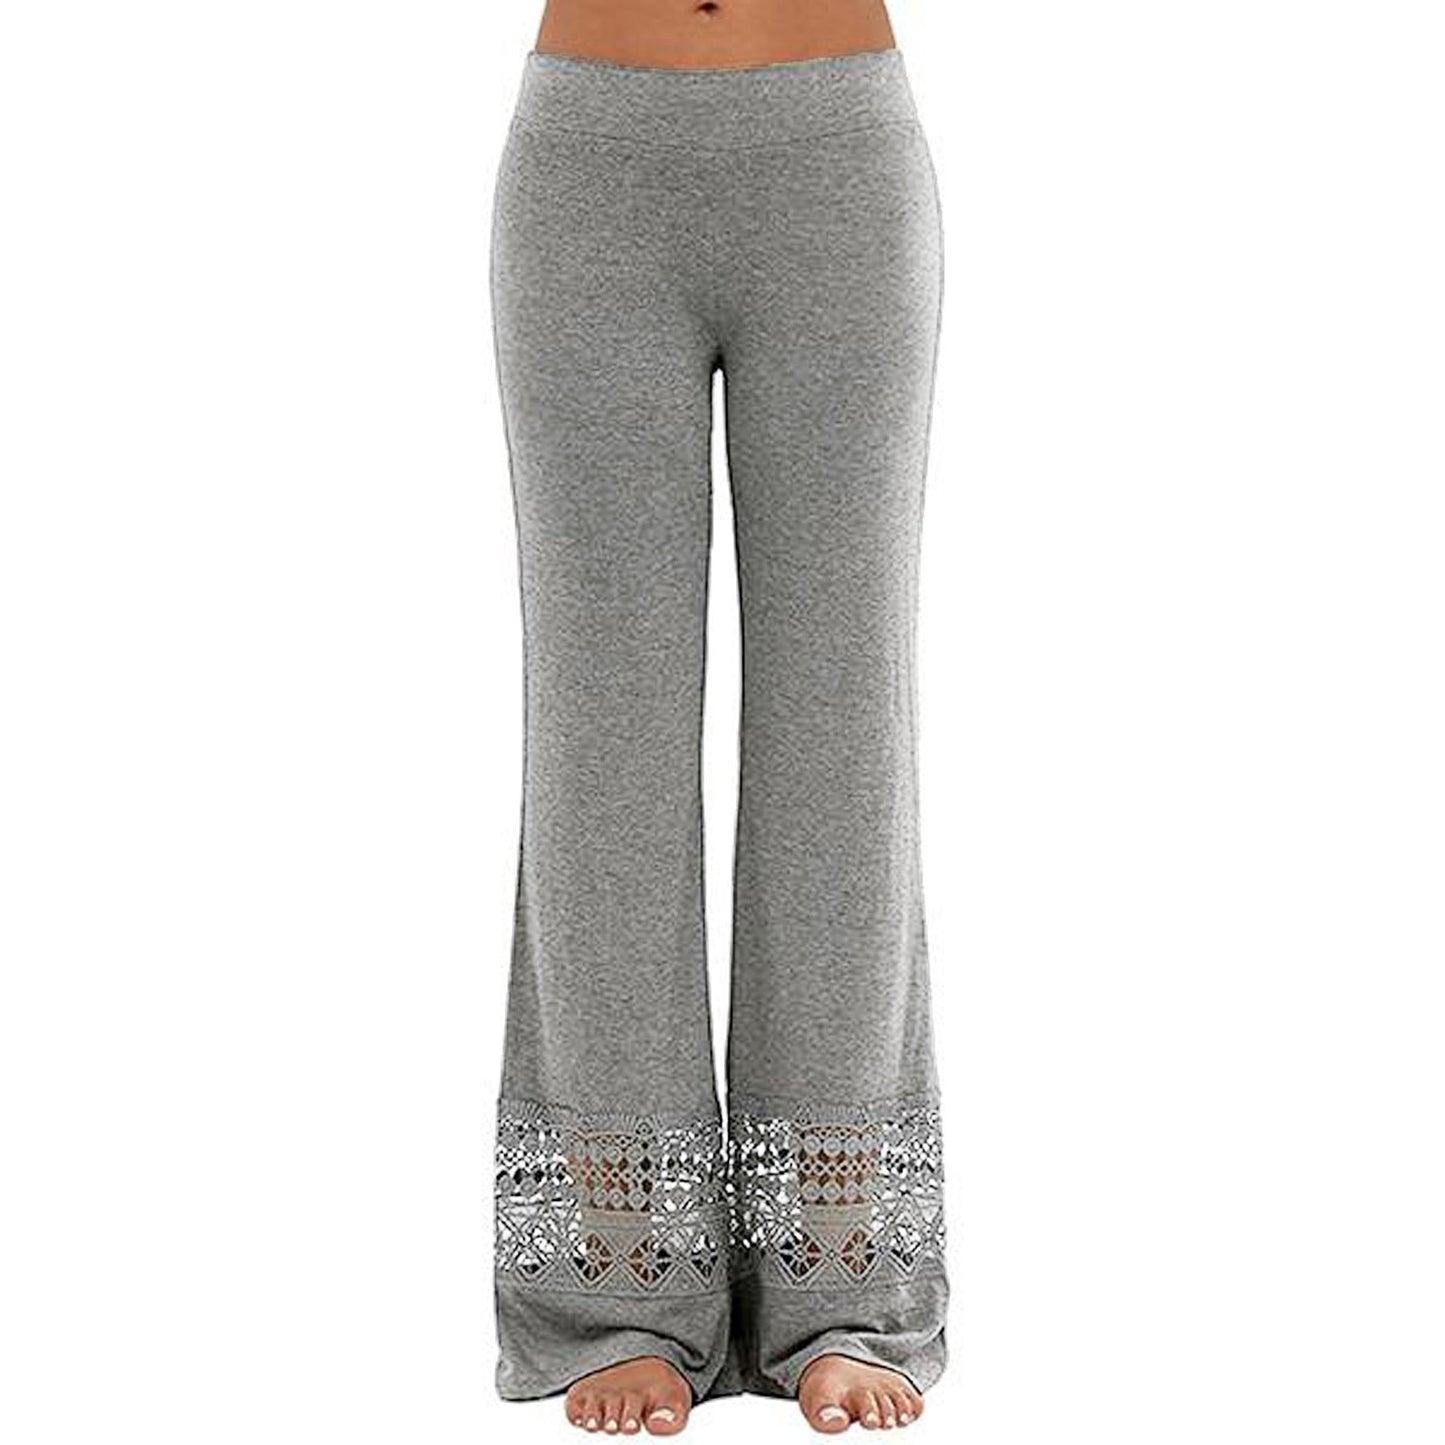 High Waist Lace Bottom Yoga Pants